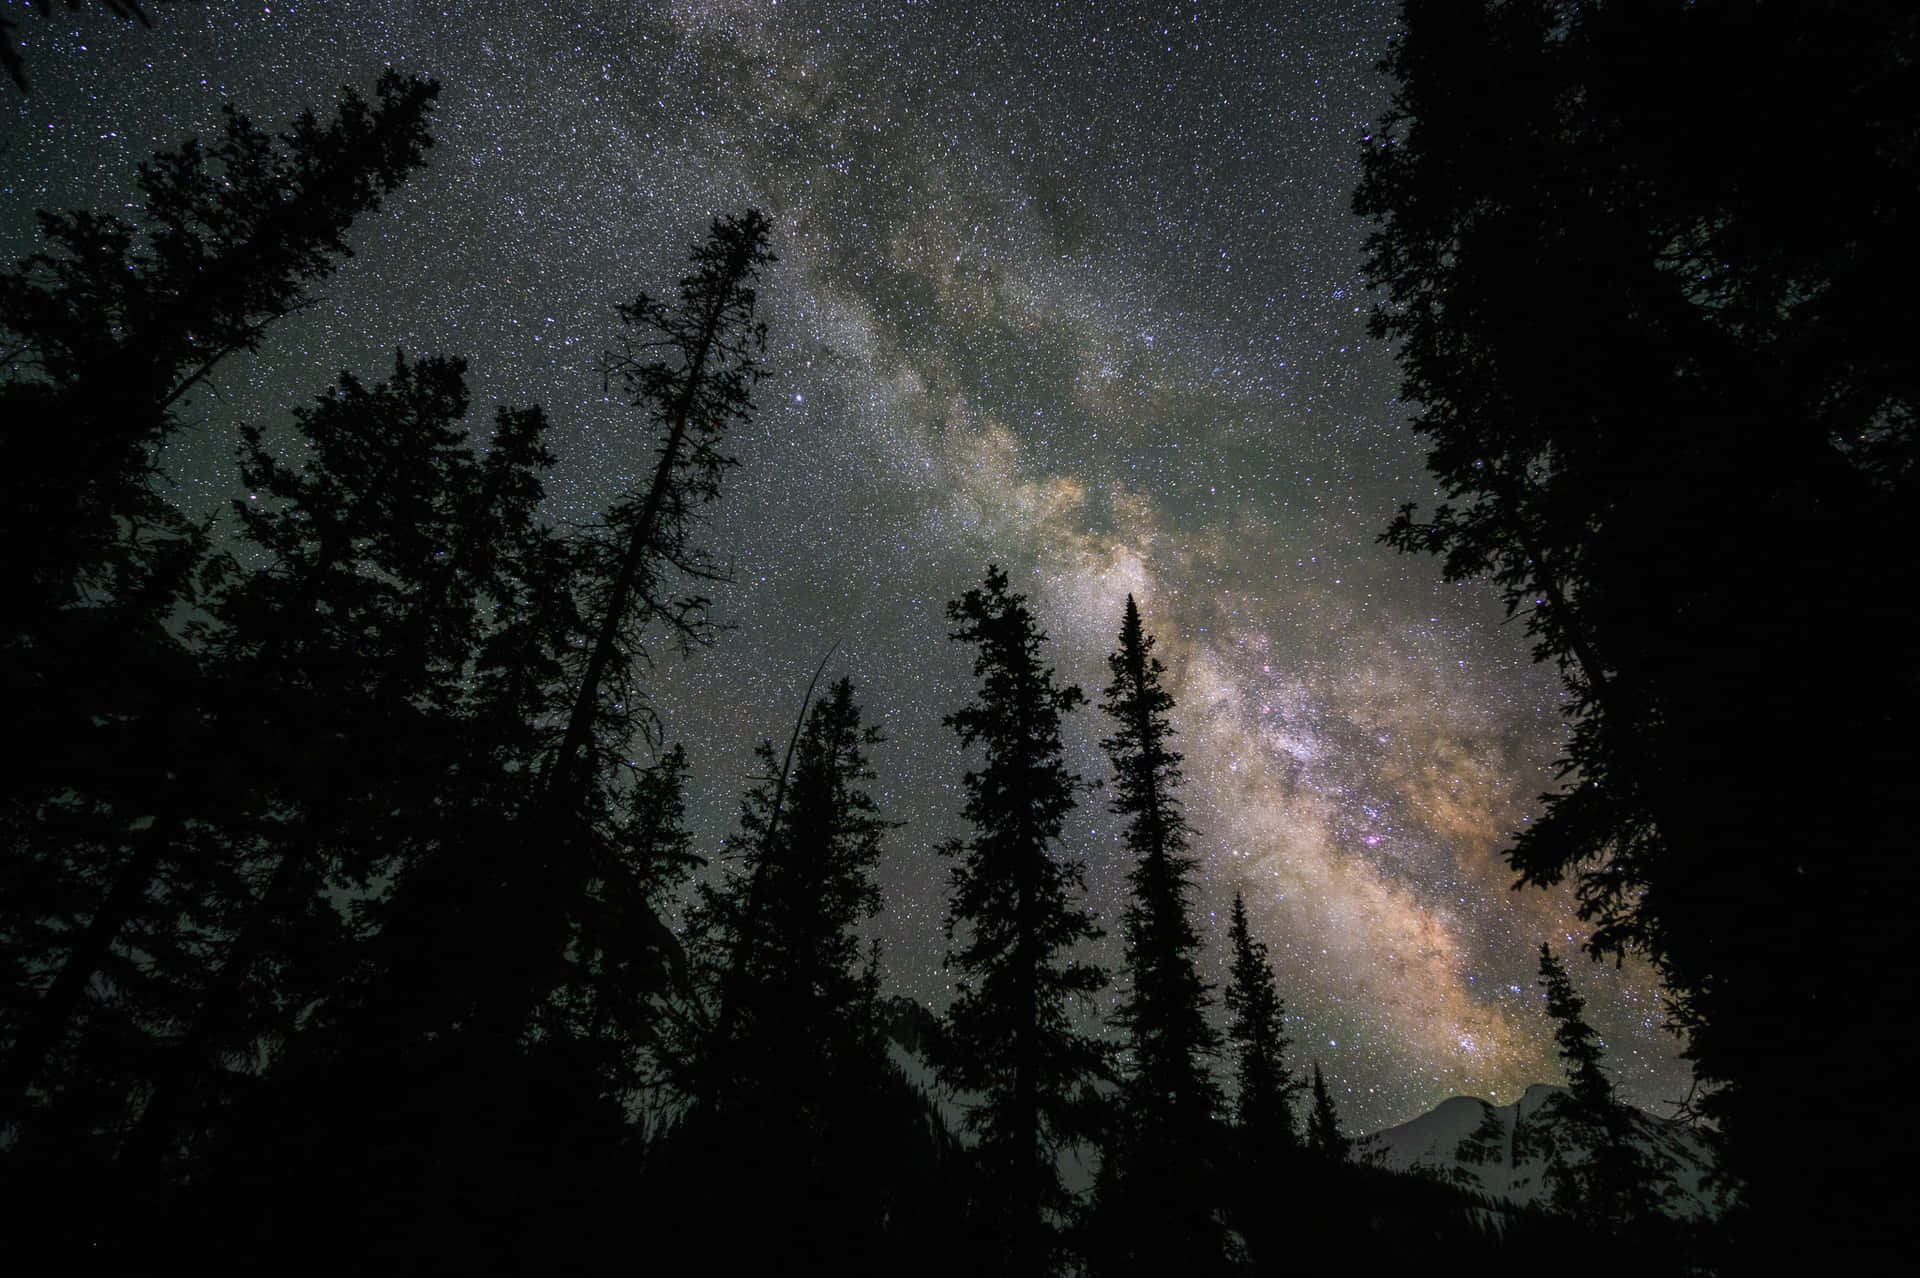 Milky Way Shines Brightly Over Enchanting Night Sky